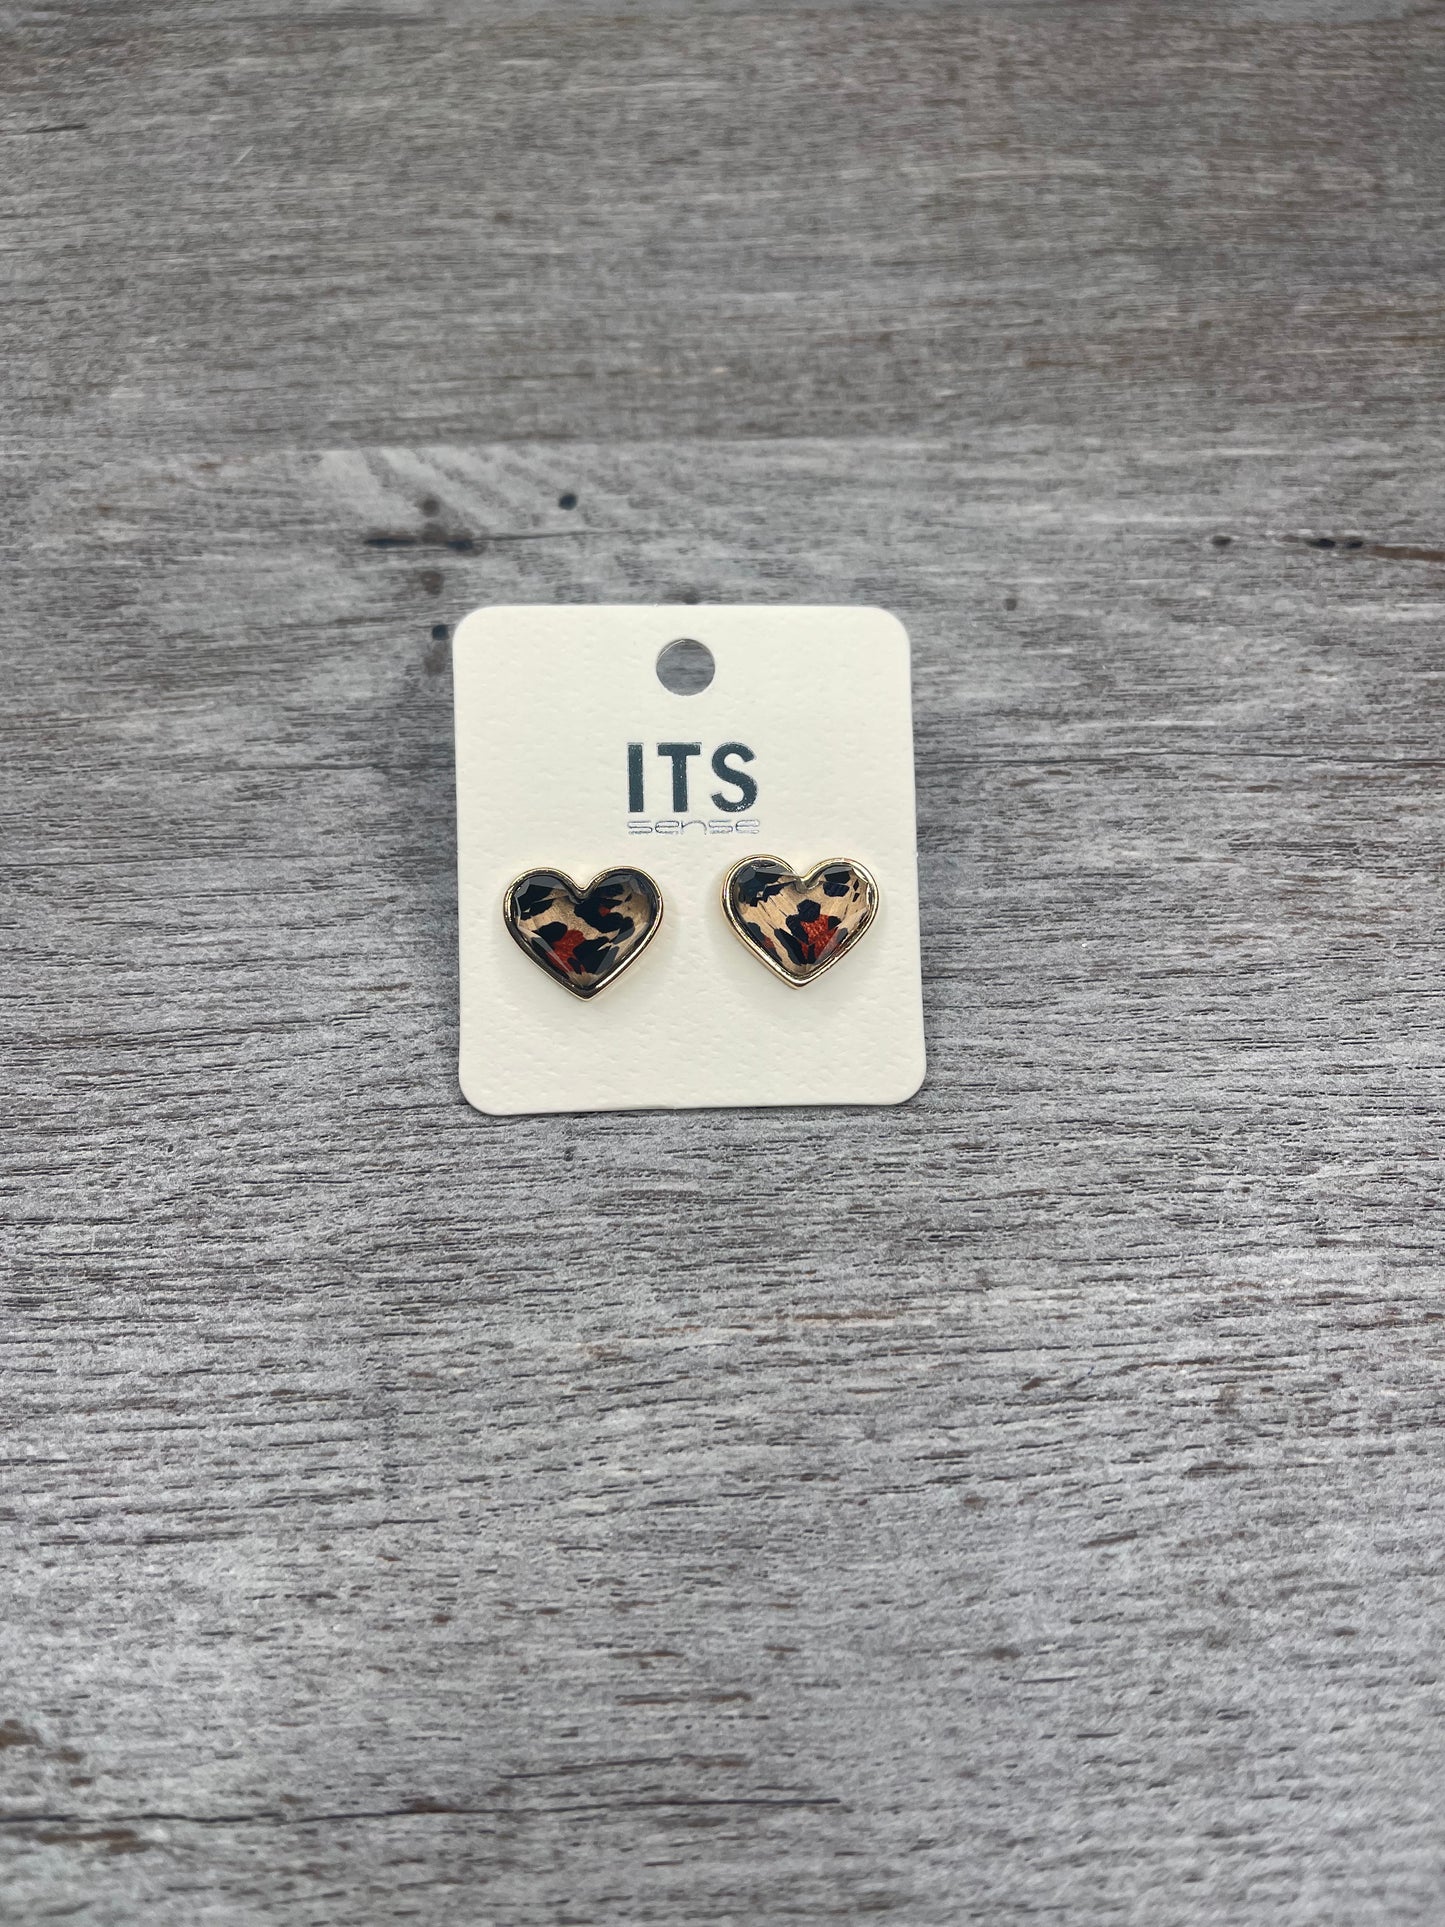 A Loving Heart Earrings {Multiple Styles Available}